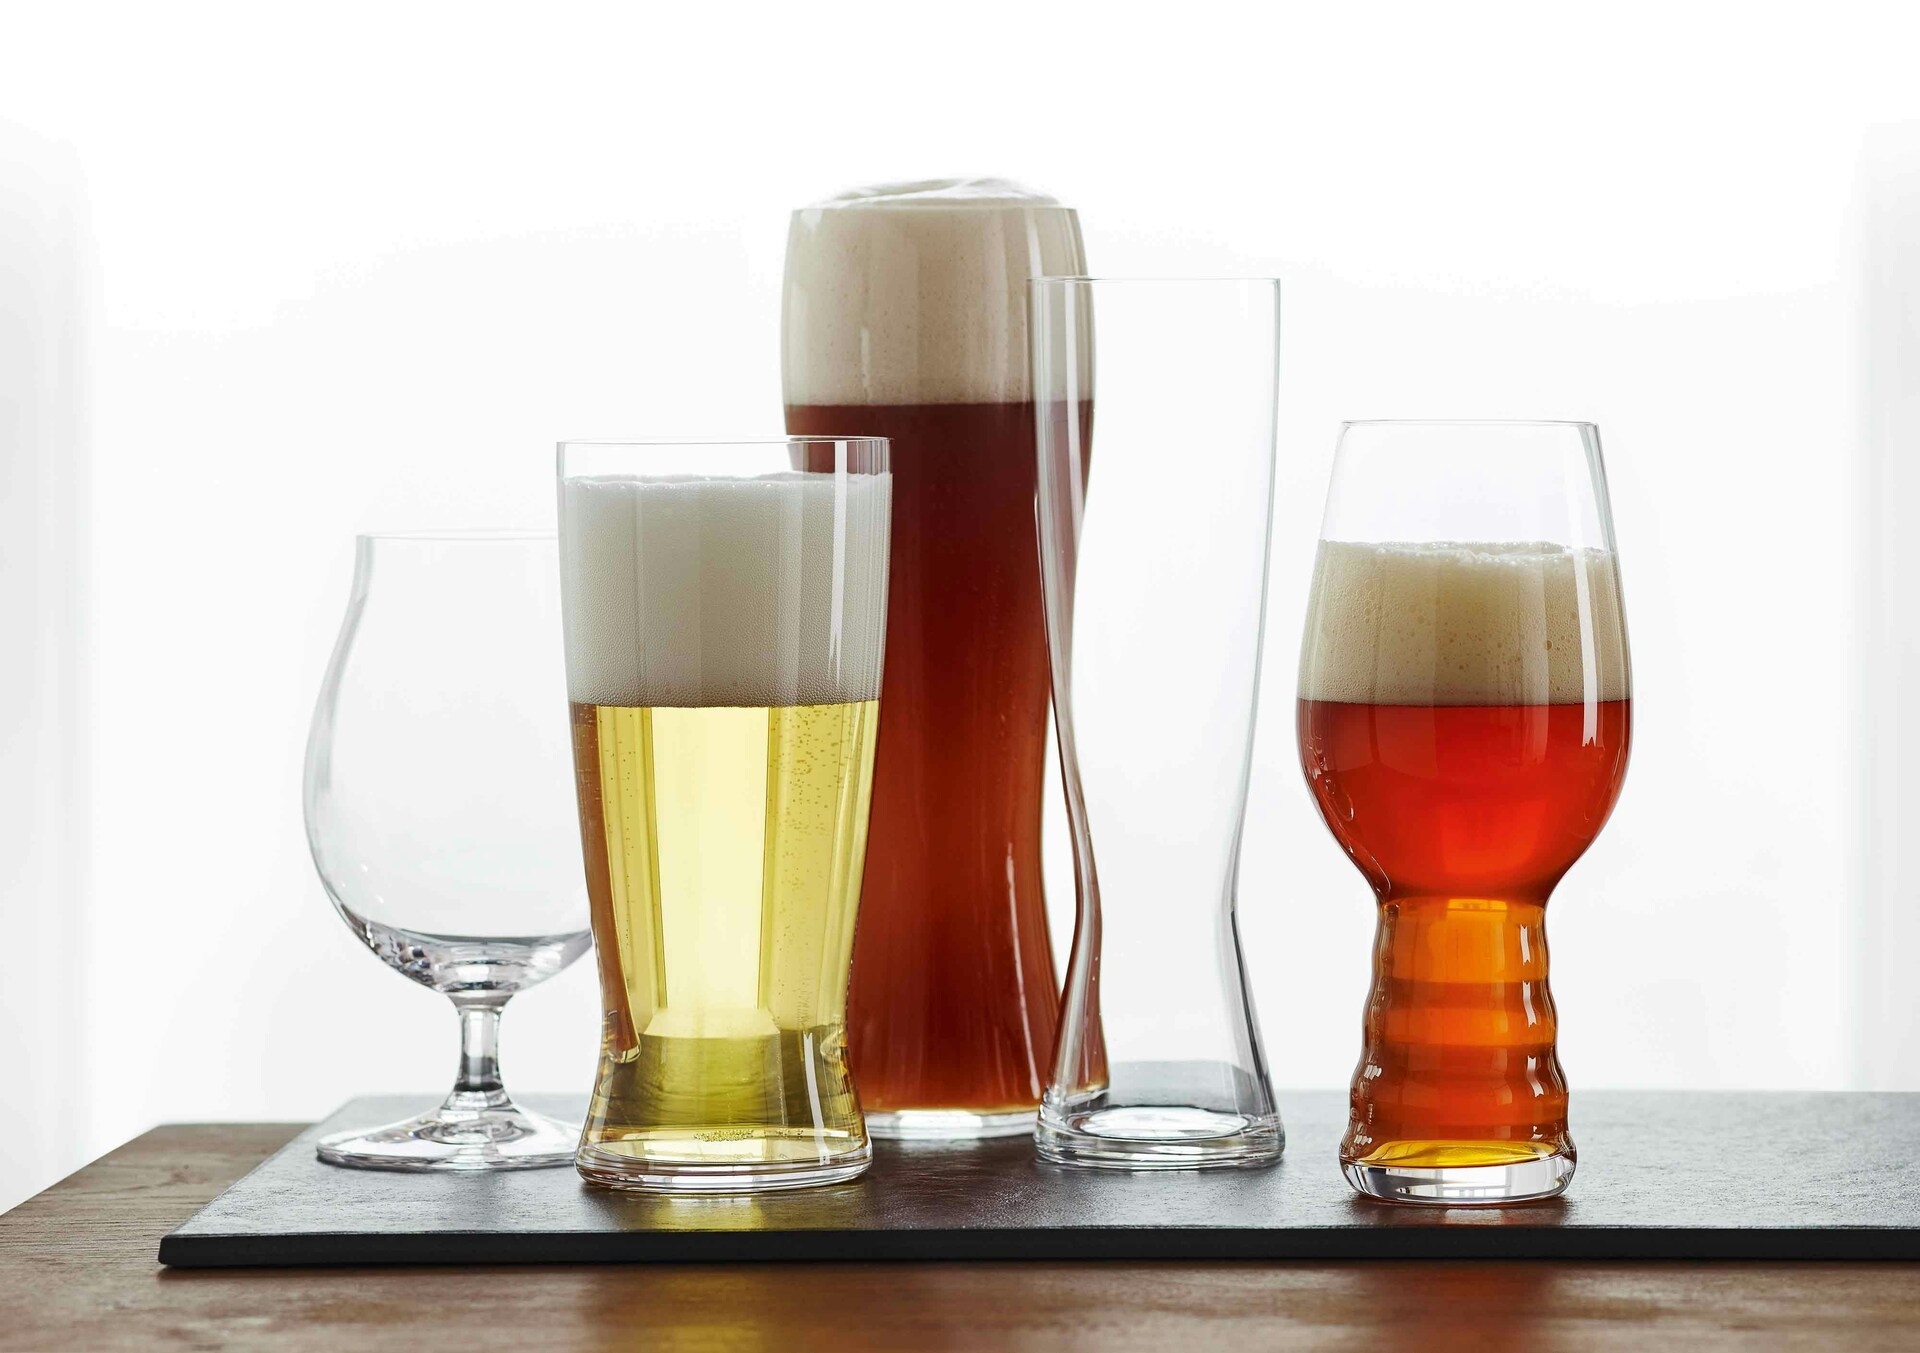 https://royaldesign.com/image/2/spiegelau-beer-classic-tasting-glass-kit-4-pcs-1